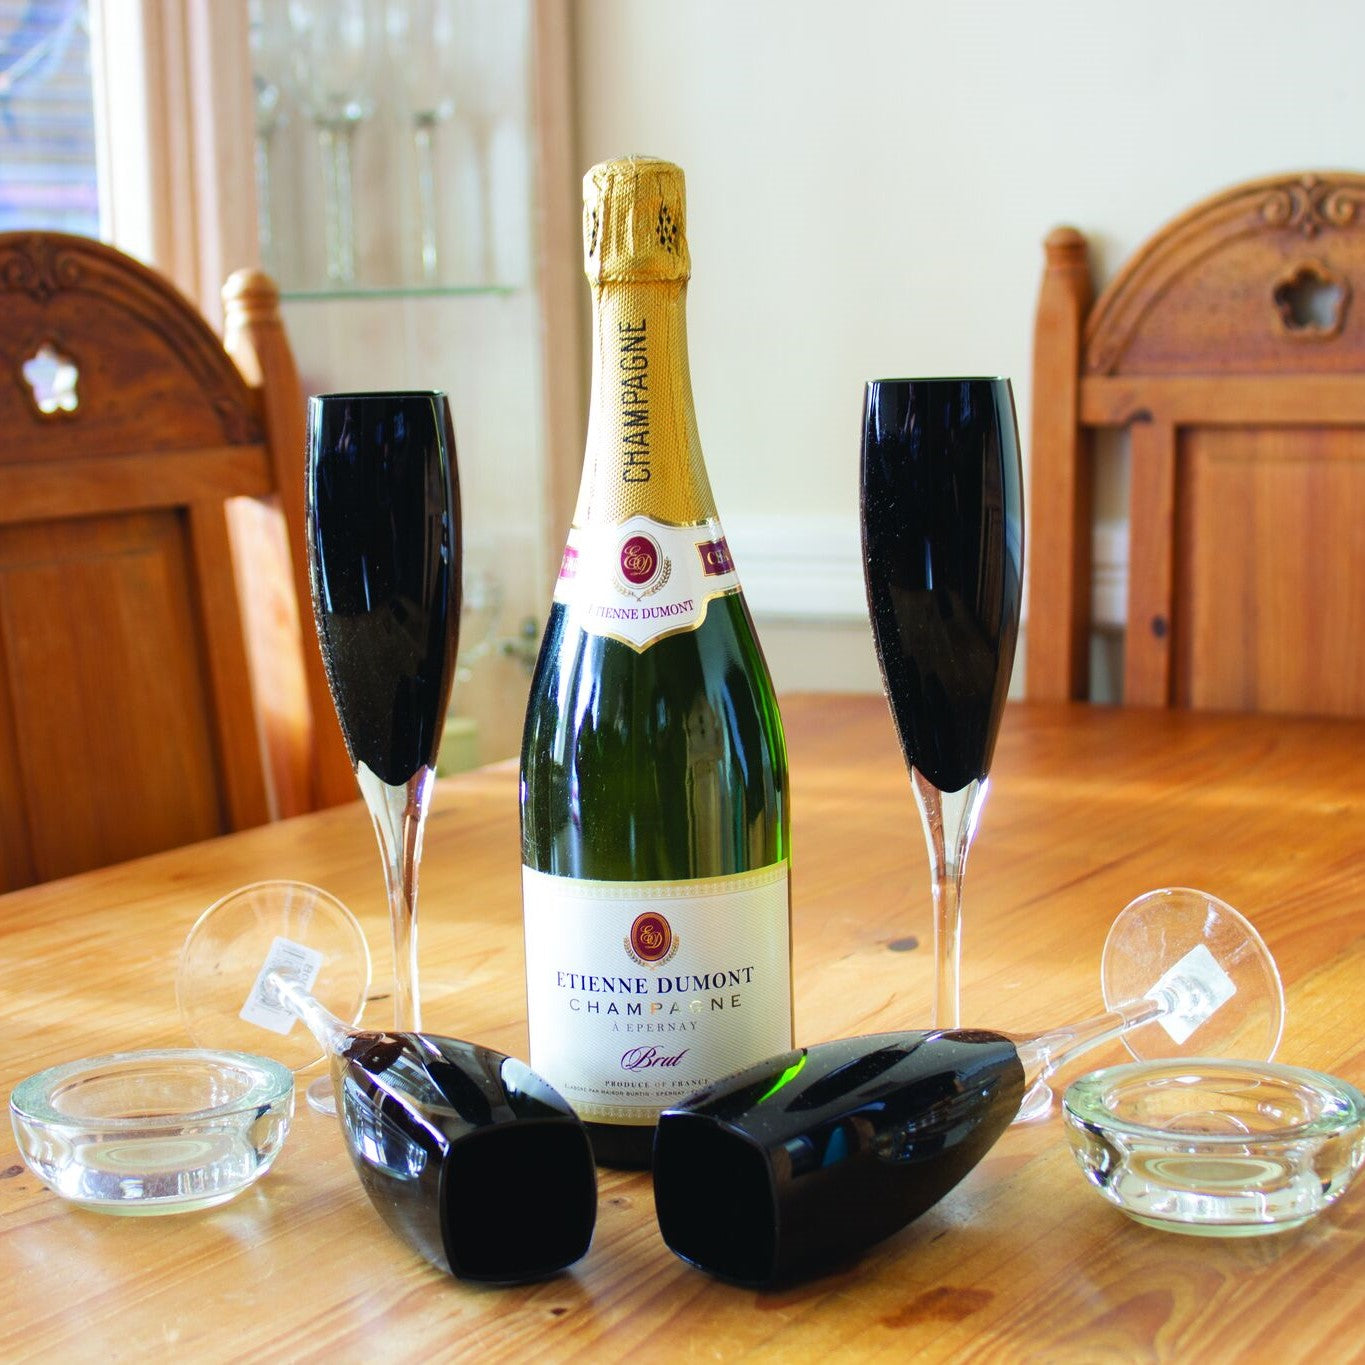 Set of 4 Champagne Glasses